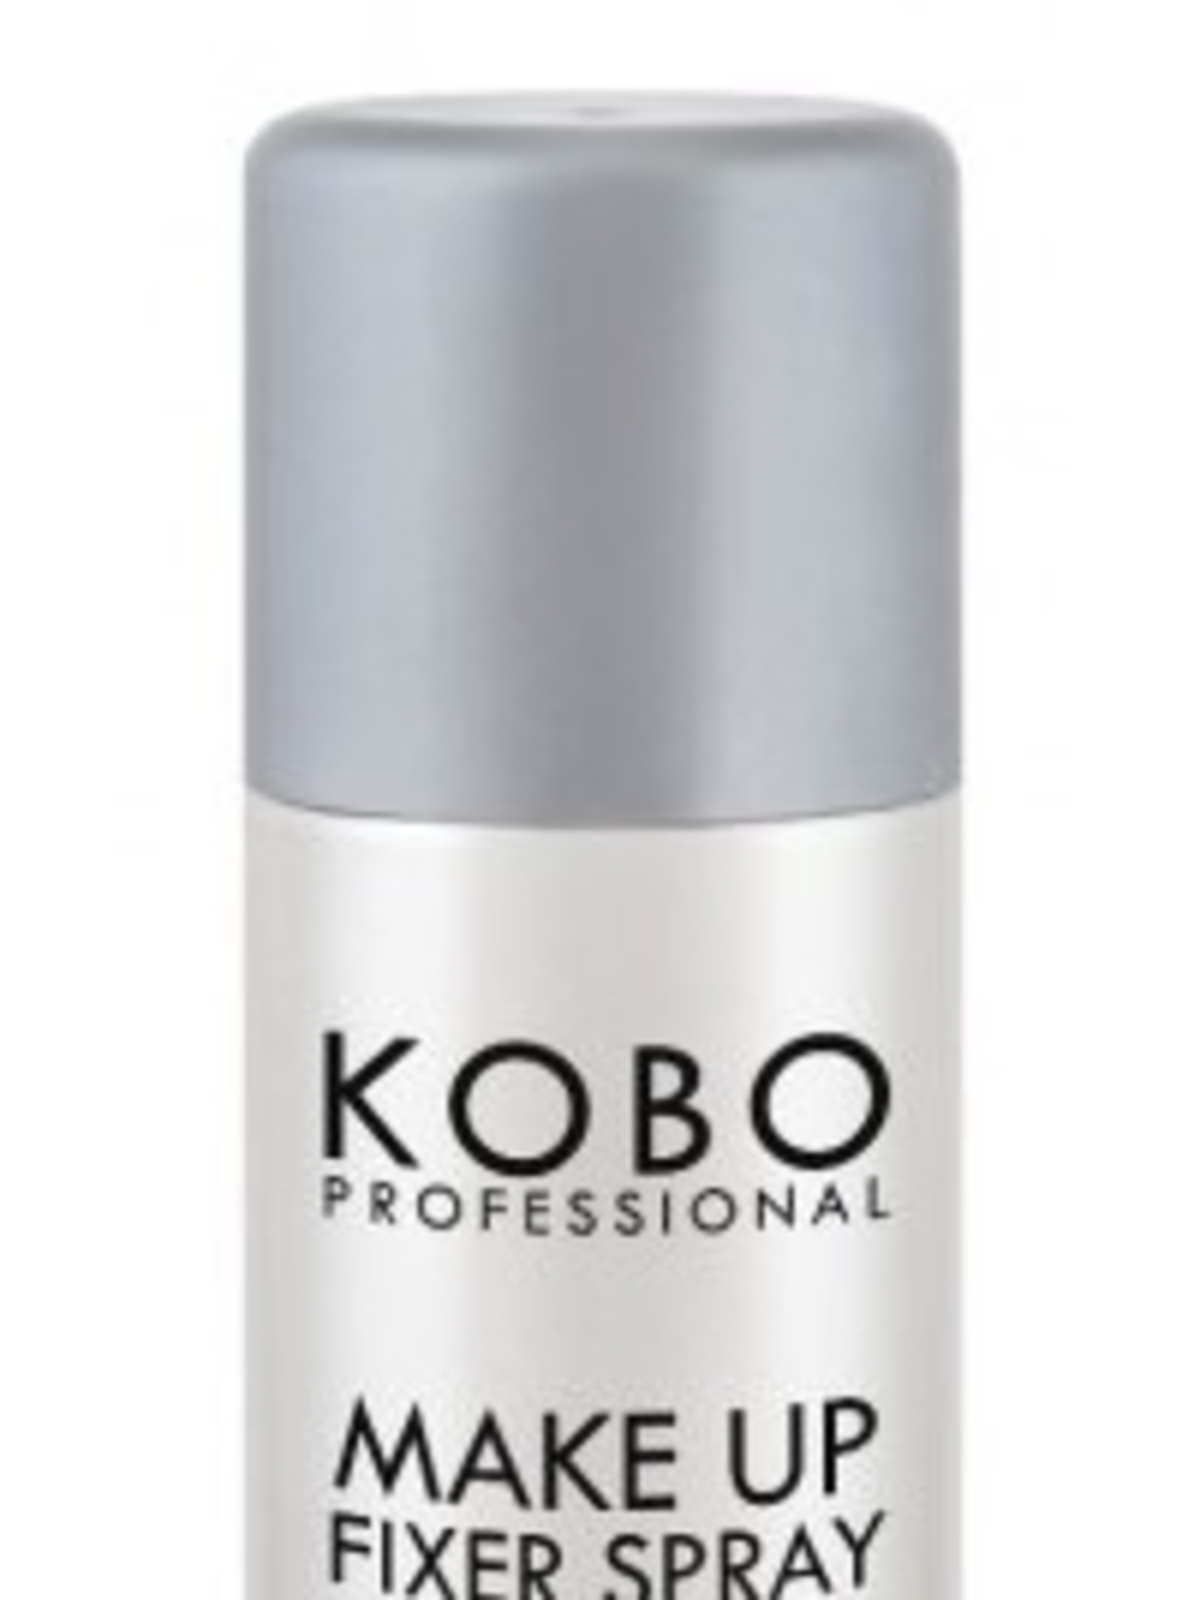 Kobo Professional, Make Up Fixer Spray